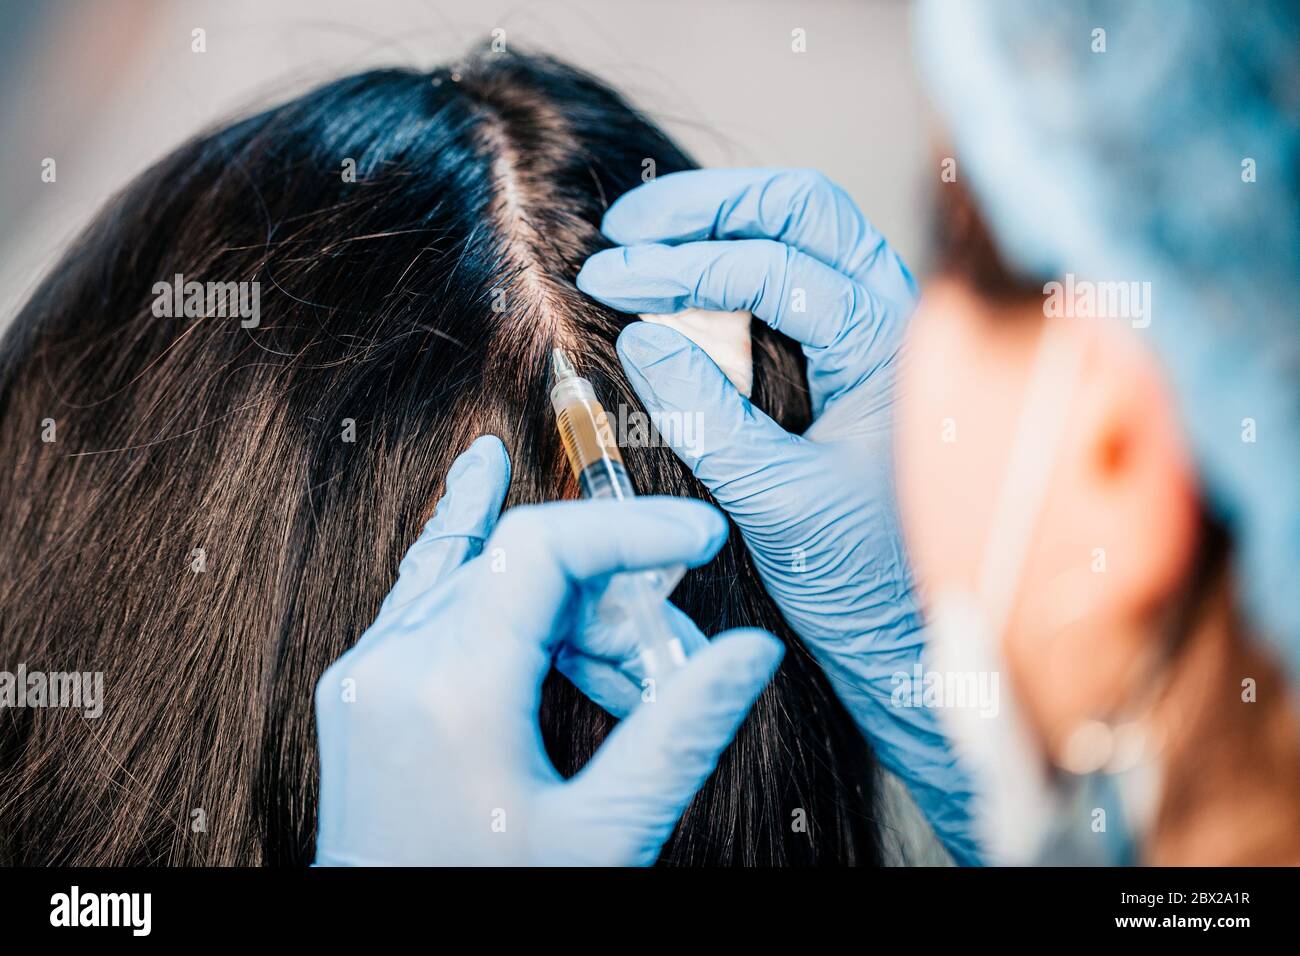 Hair transplantation - hair follicle transplantation - treatment of baldness and strengthening the scalp Stock Photo